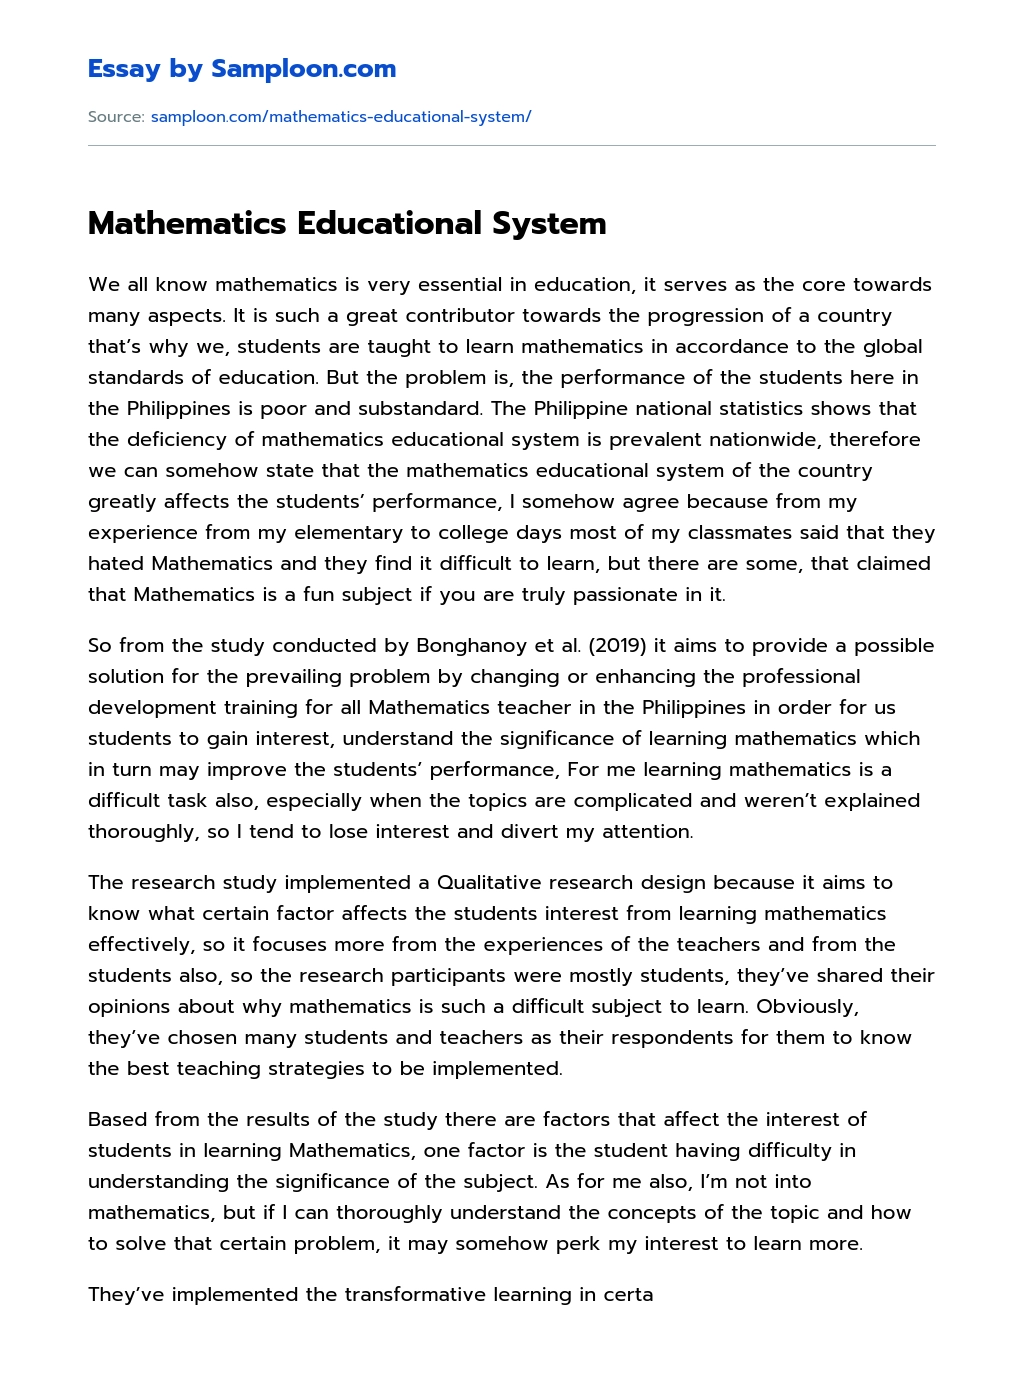 Mathematics Educational System essay